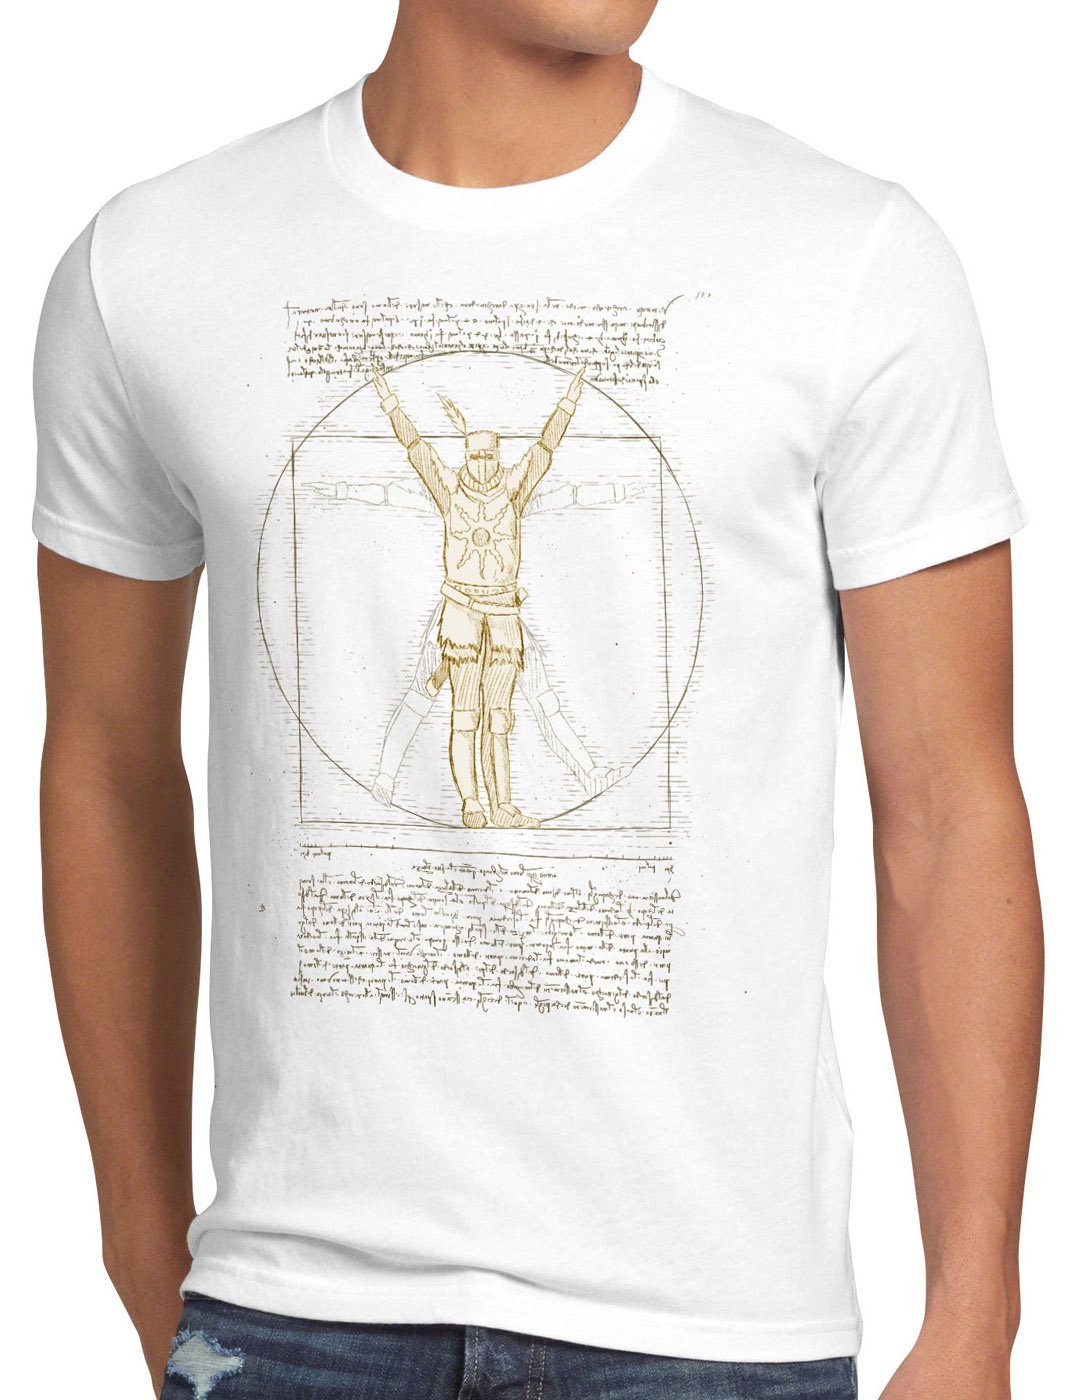 Vitruvianischer Solaire Astora souls dark sunbro weiß of Print-Shirt style3 Herren T-Shirt